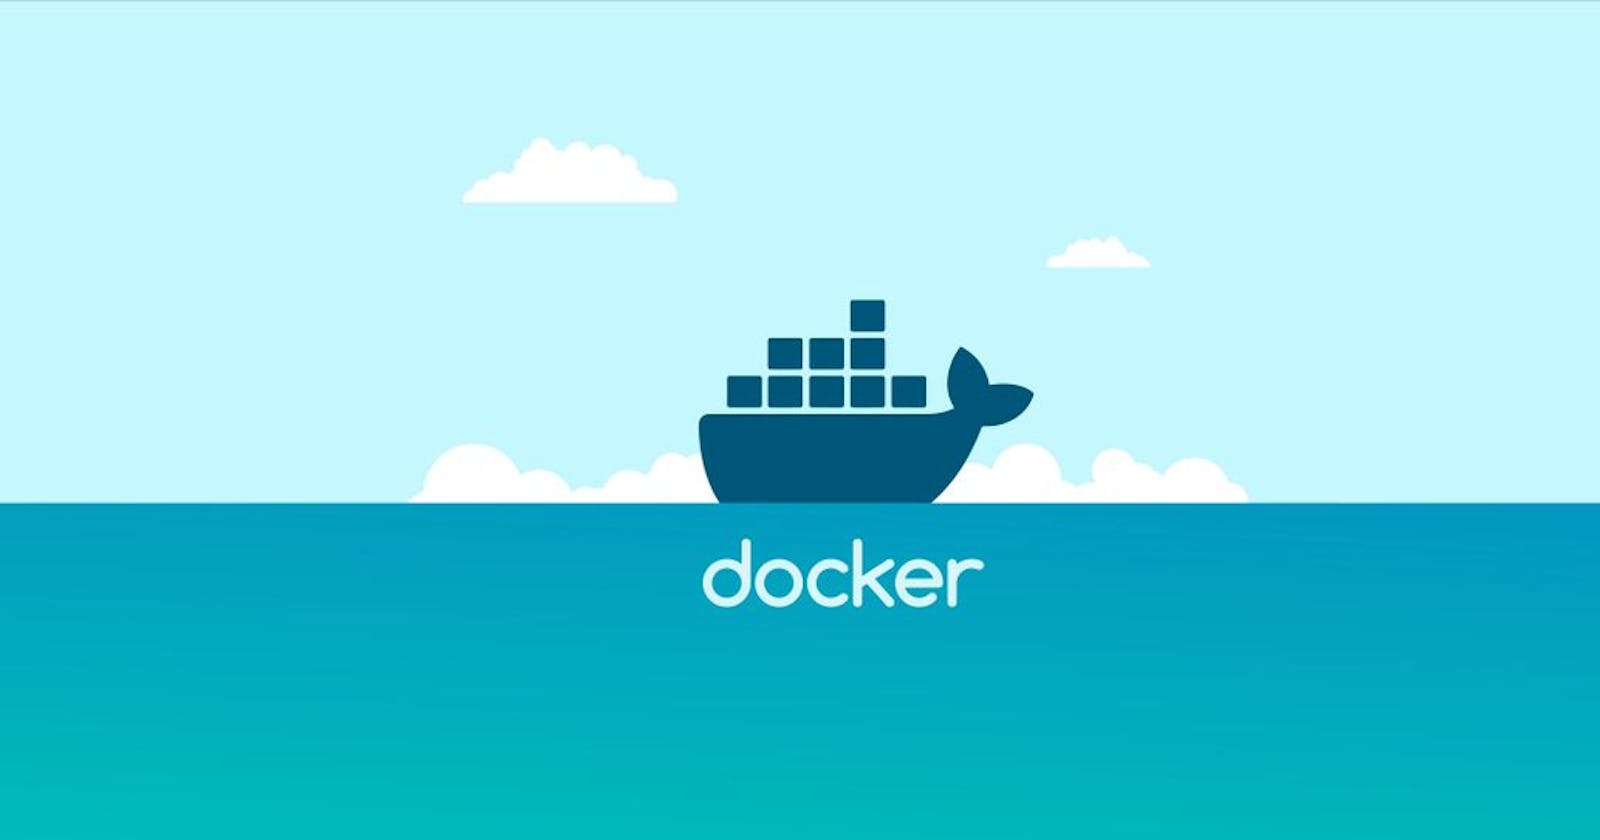 Image: Exploring Docker's Building Blocks -
Docker objects